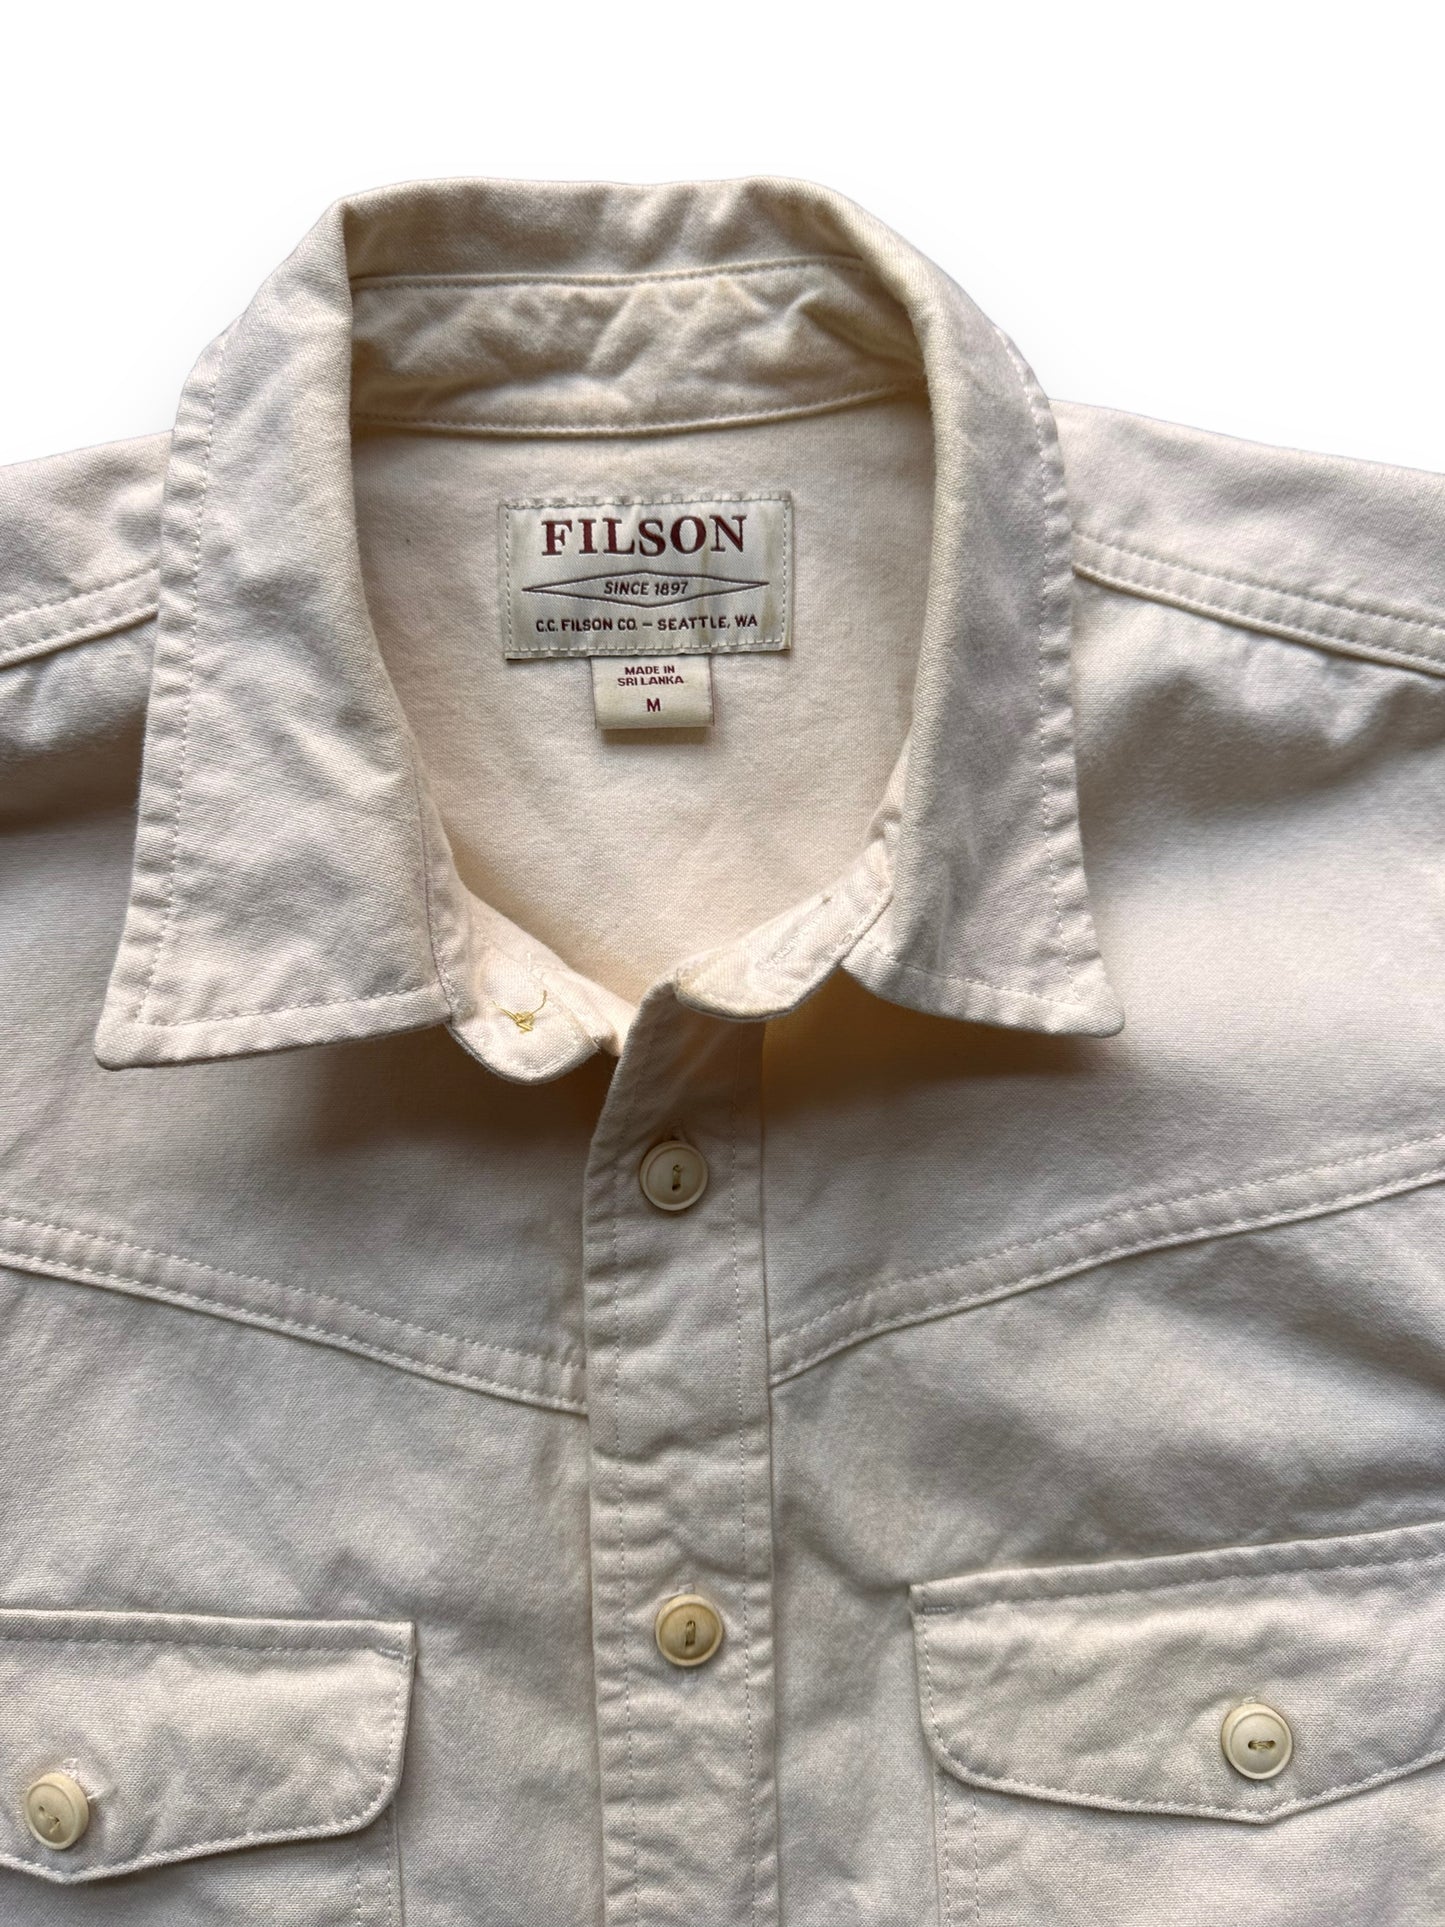 Tag View of Filson Yukon Chamois Shirt SZ M |  Barn Owl Vintage Goods | Vintage Filson Workwear Seattle